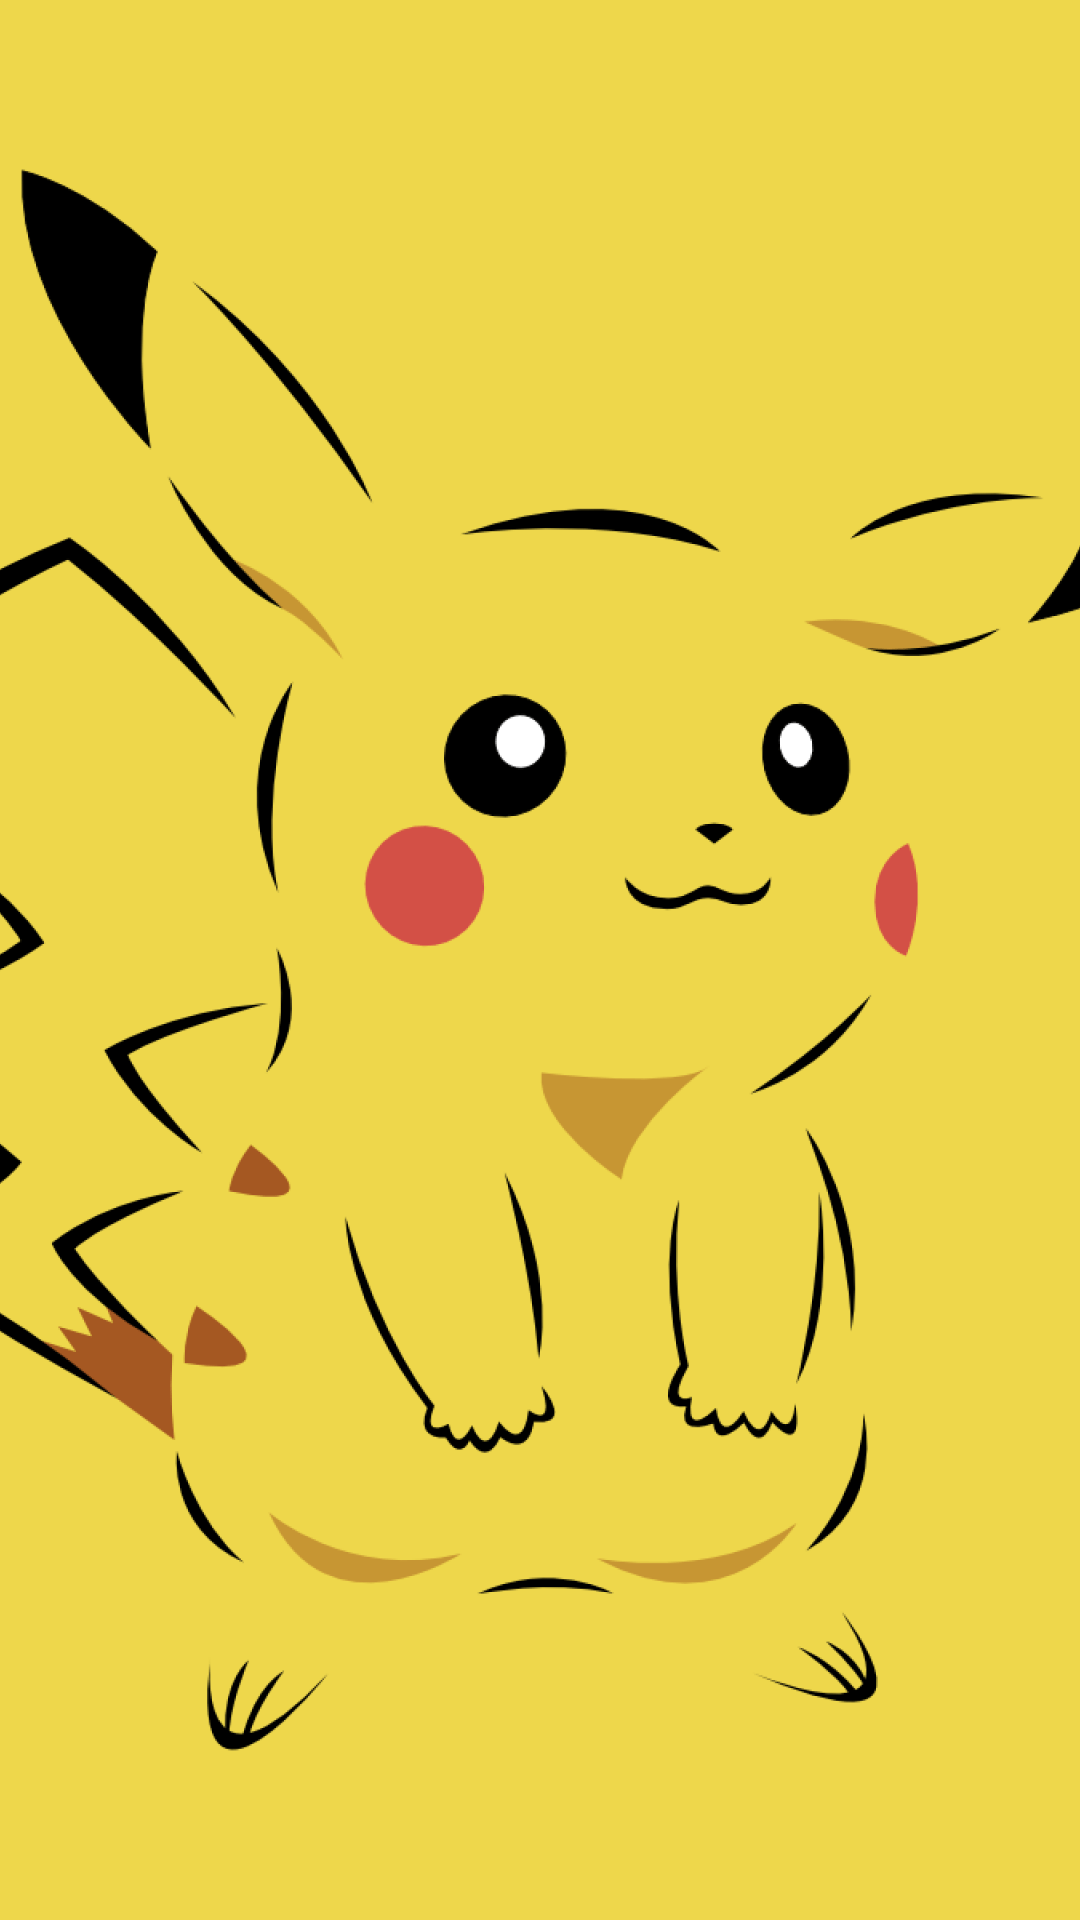 Pikachu HD Wallpaper for iPhone 6 Plus. Wallpaper